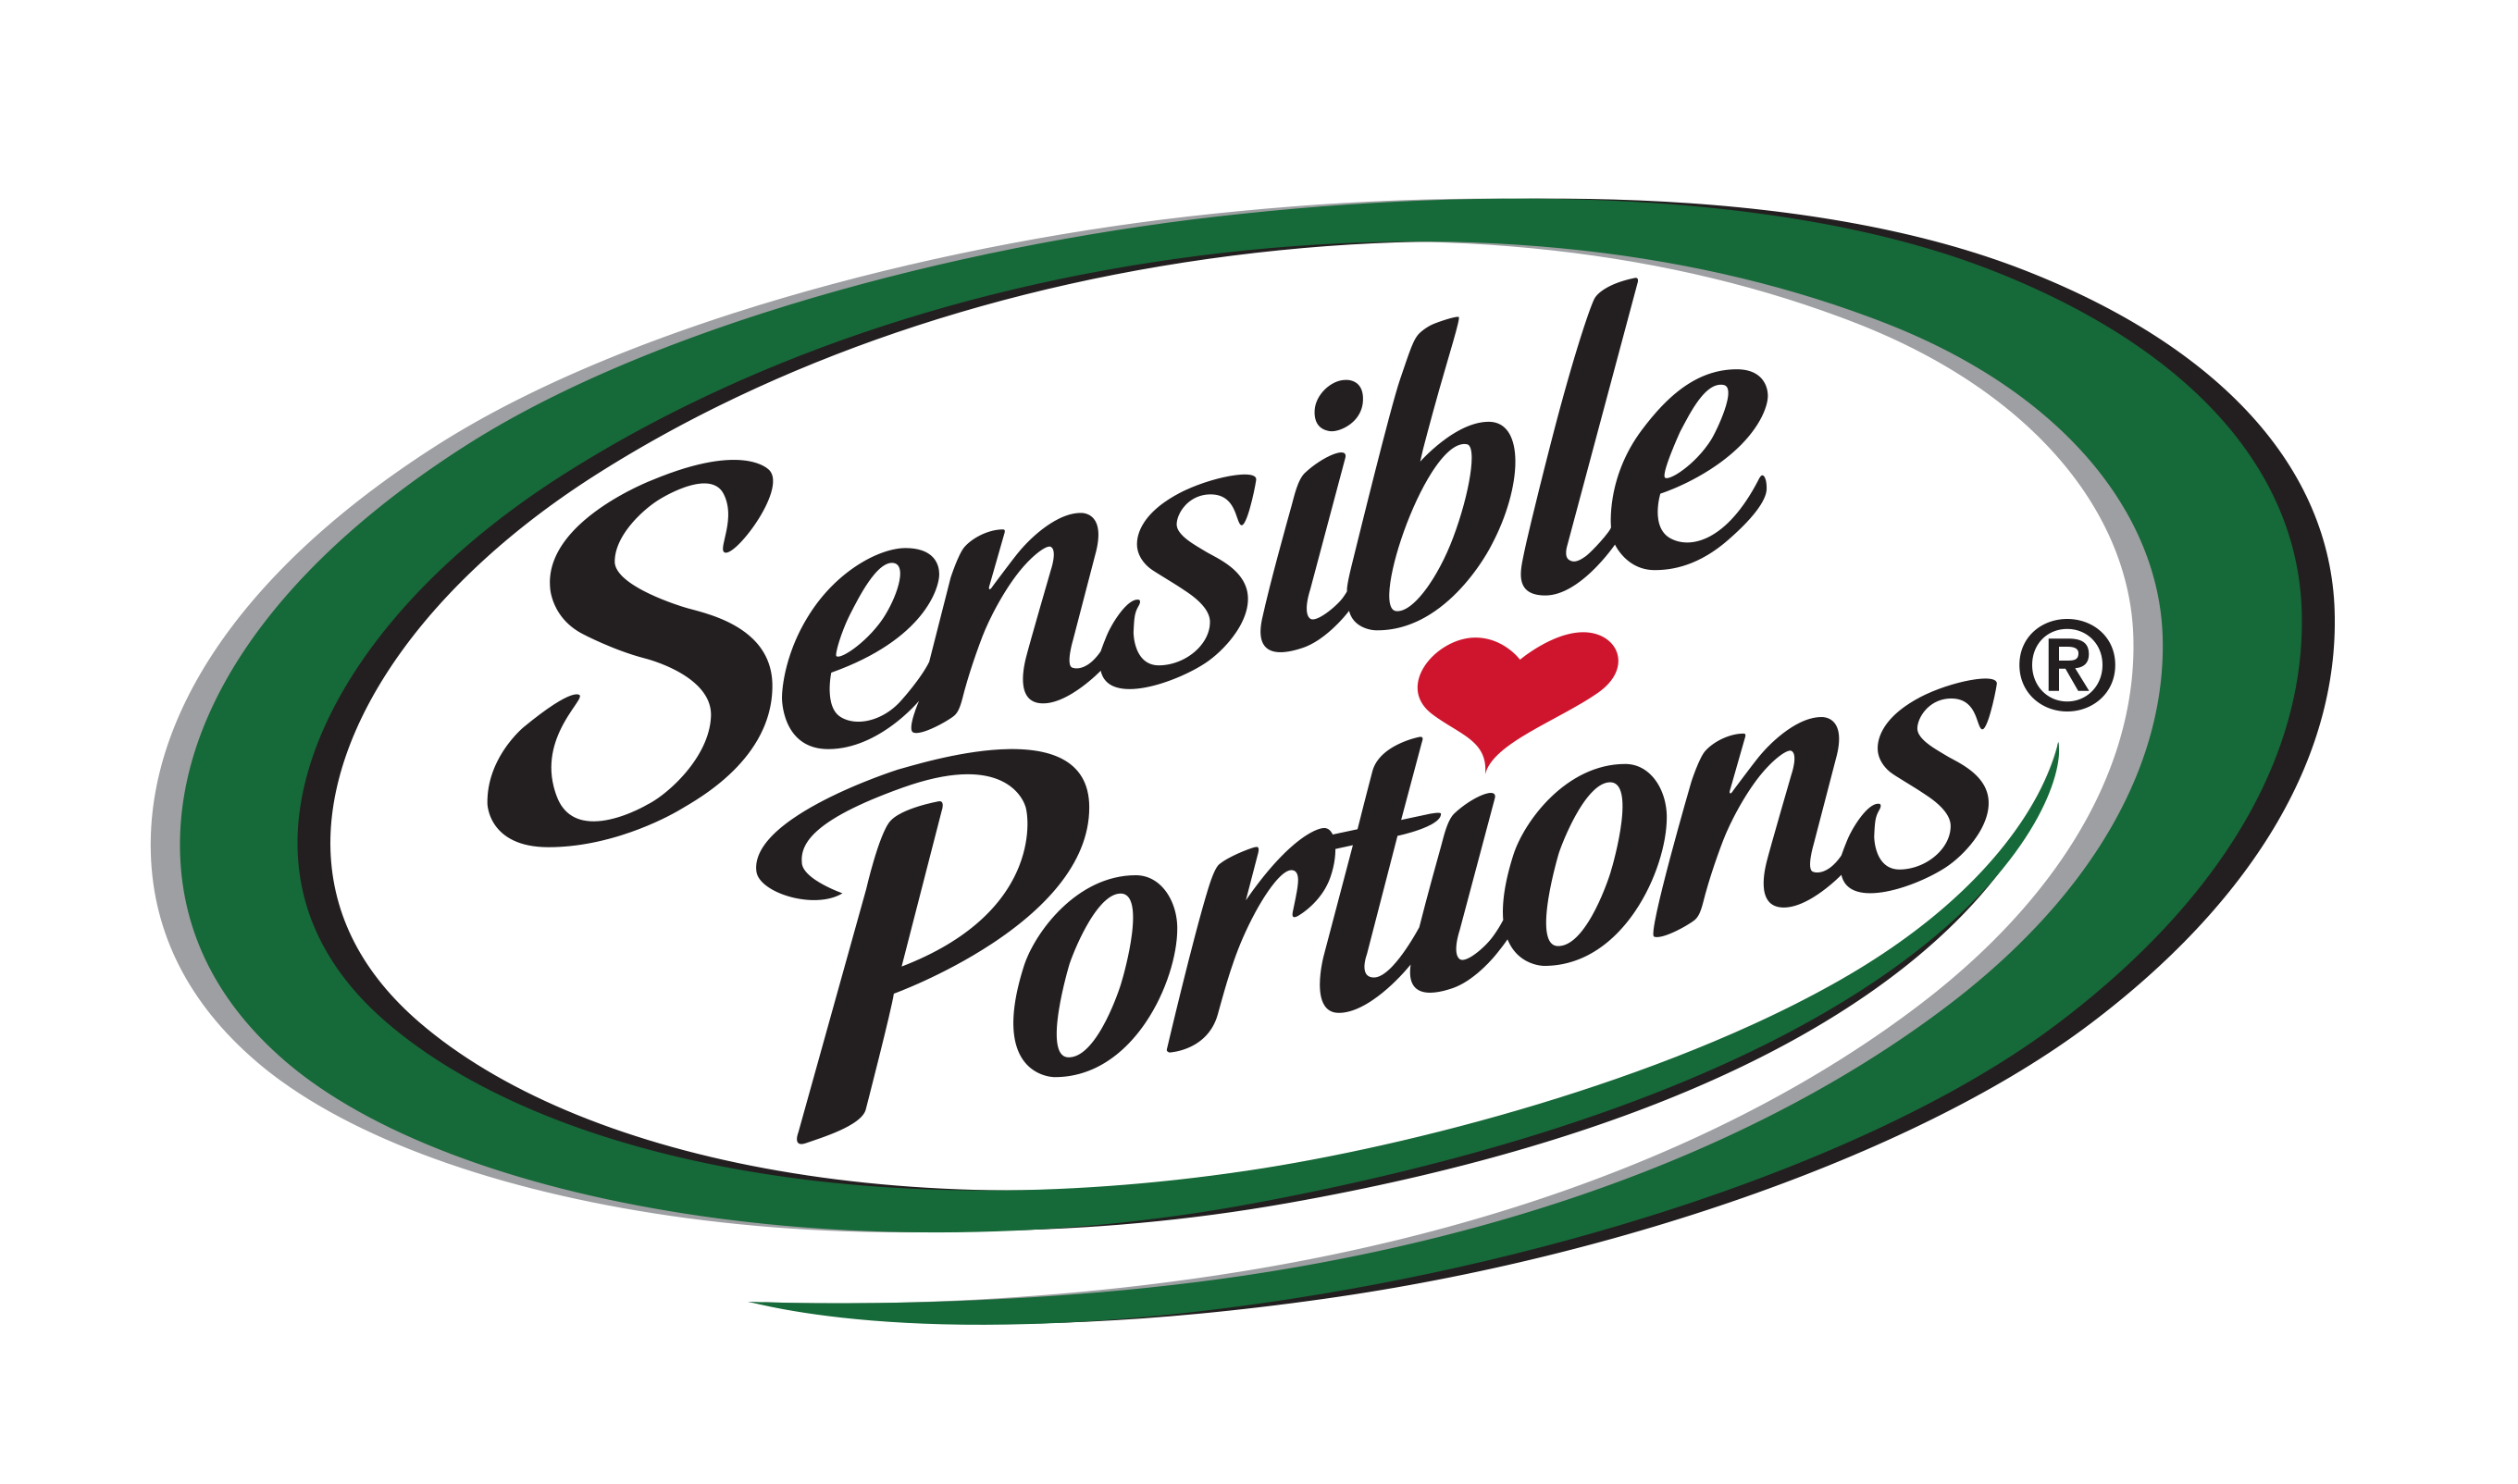 Sensible Portions logo